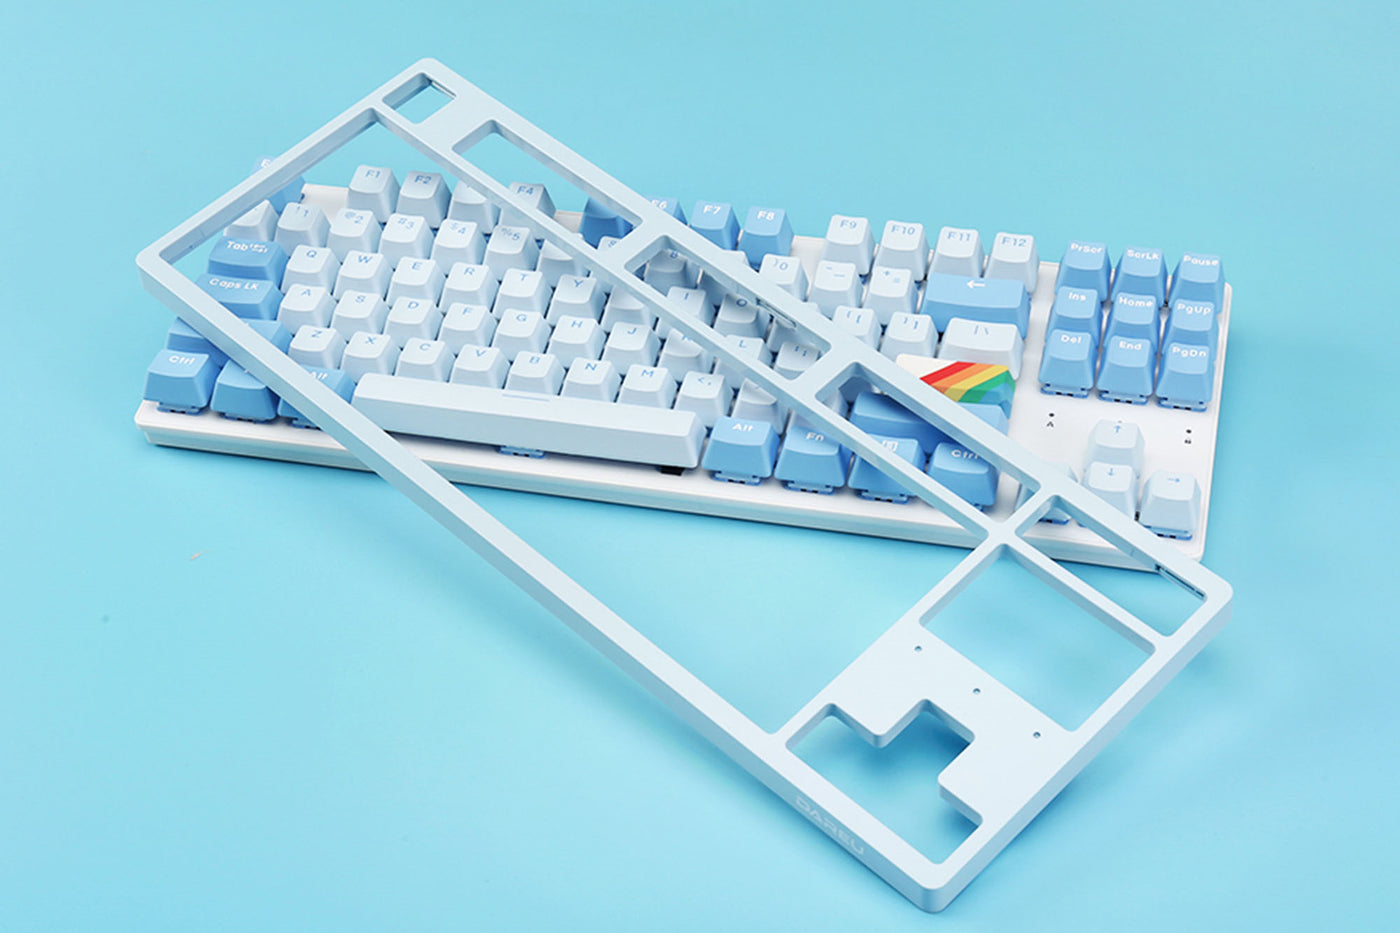 DAREU A87 LightSkyBlue Wired Mechanical Gaming Keyboard